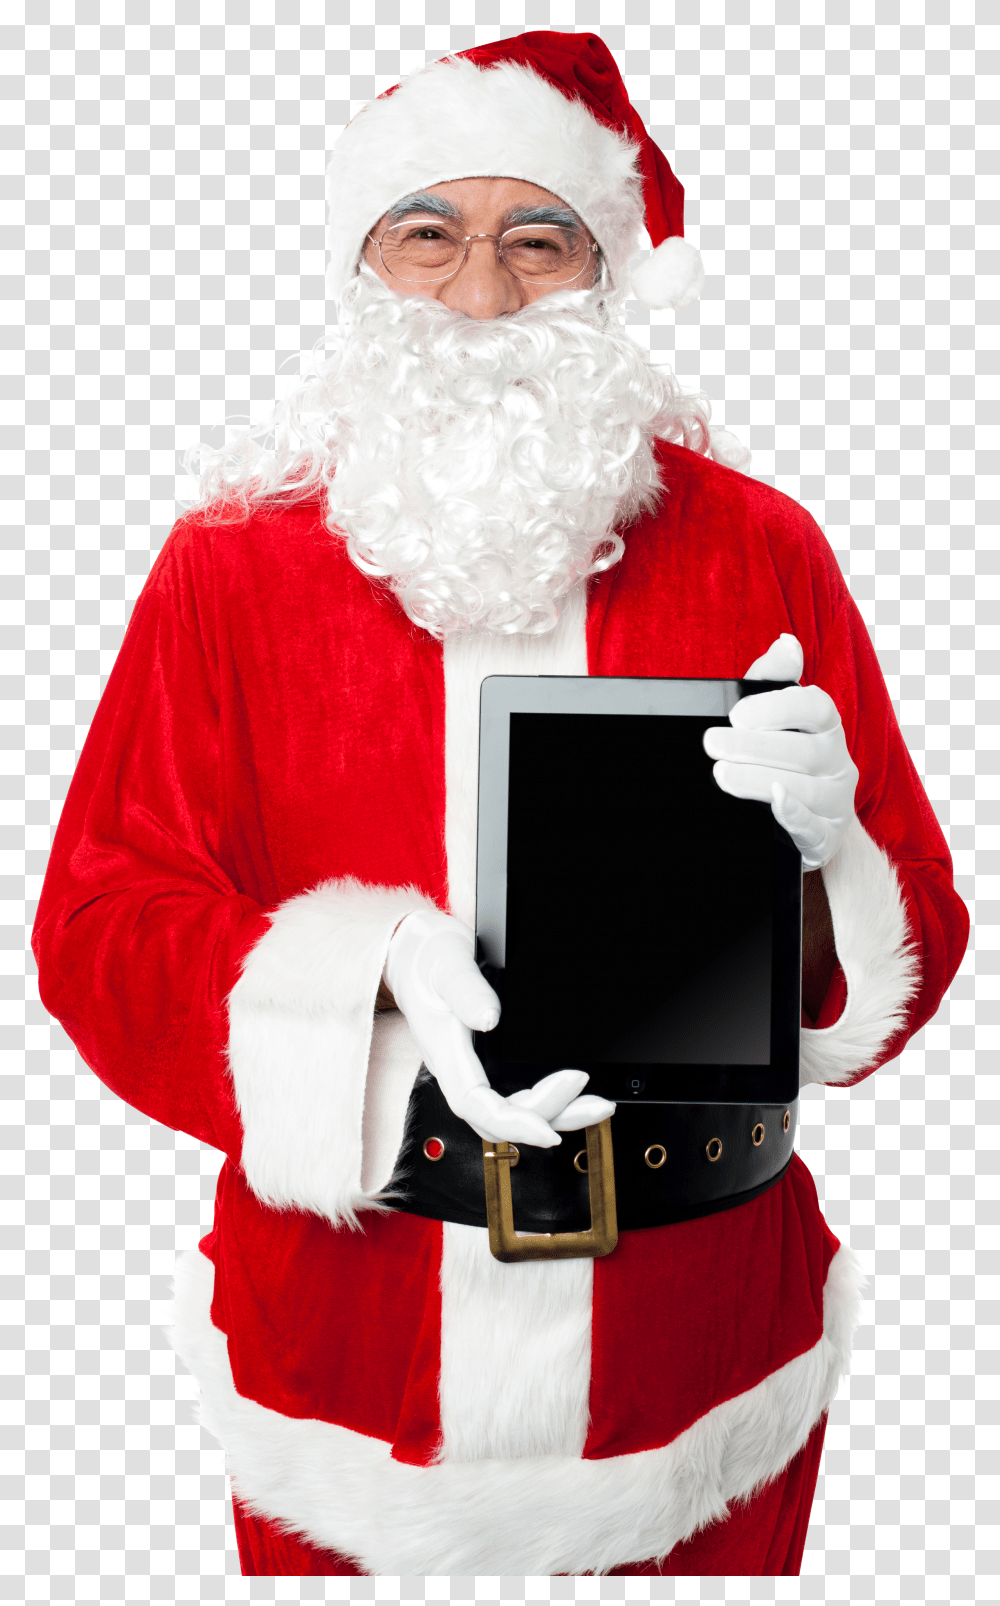 Santa Claus Image Santa Claus Gif Transparent Png